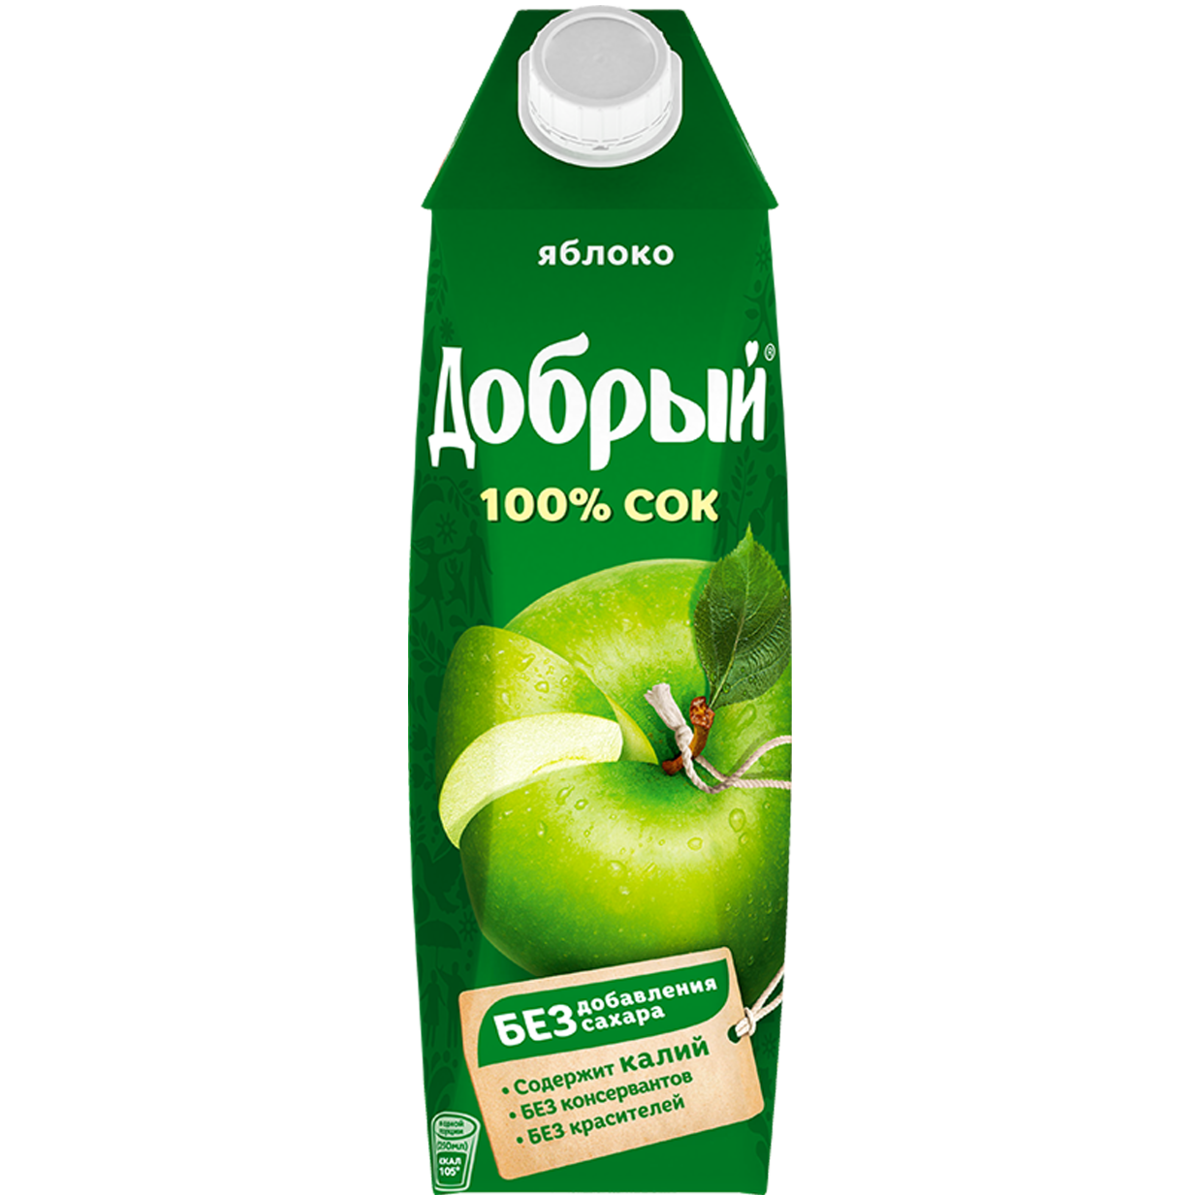 Сок добрый отзывы. Сок,нектар добрый яблоко 1л. Сок добрый зеленое яблоко 1л. Сок добрый яблочный 1л. Сок добрый 0,33 яблоко.